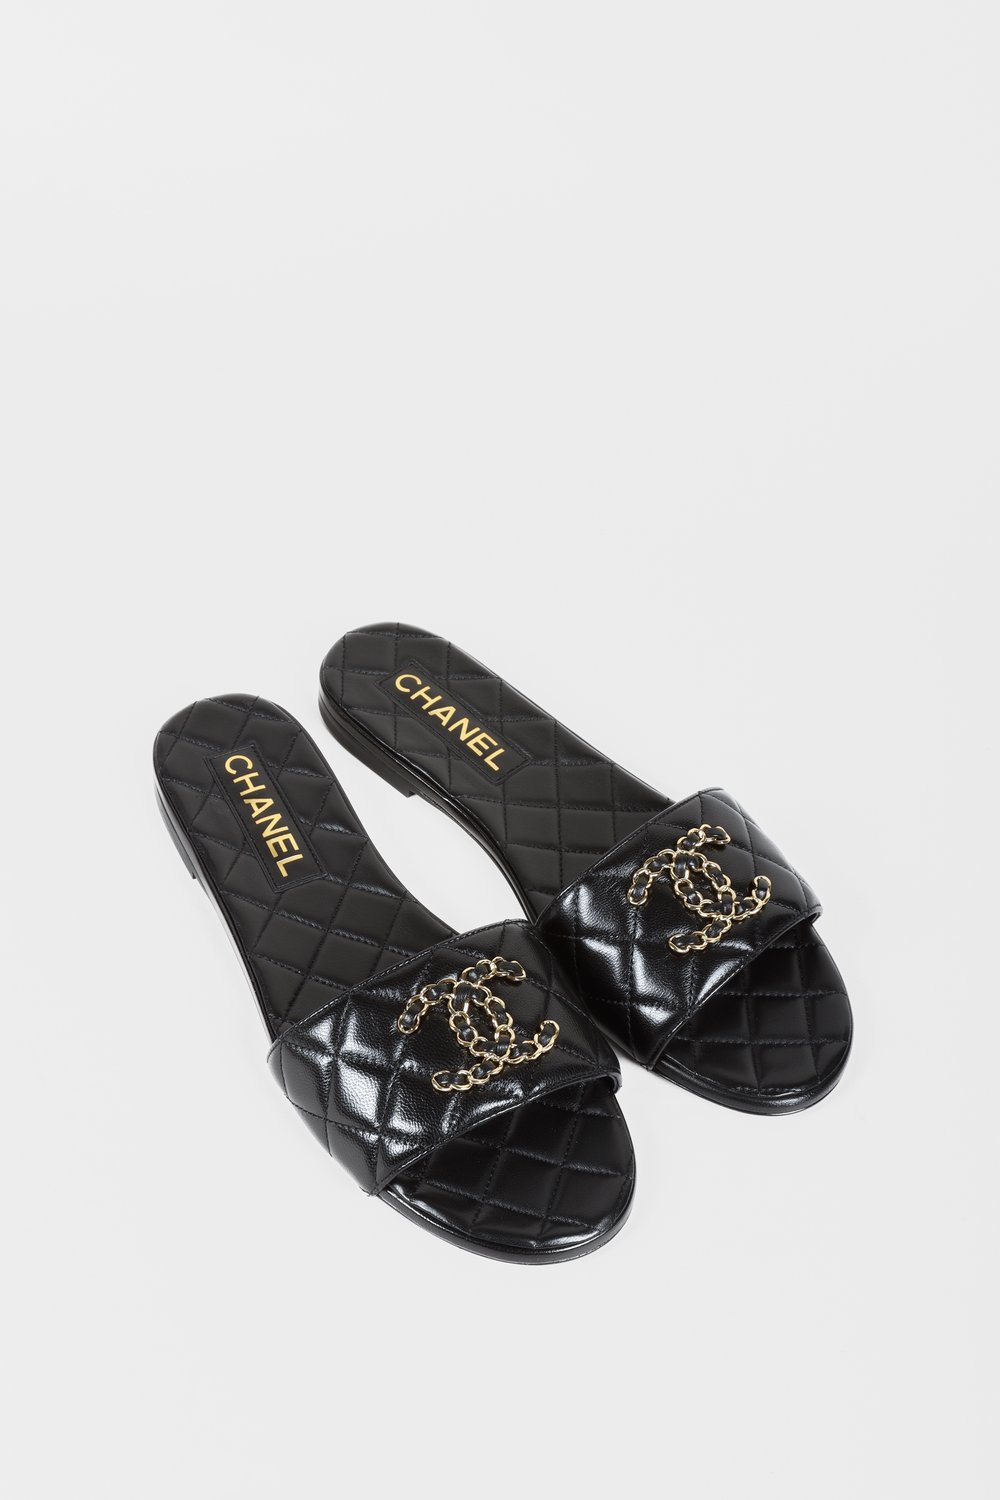 Chanel Black White Cc Logo Slides Sandals 39.5